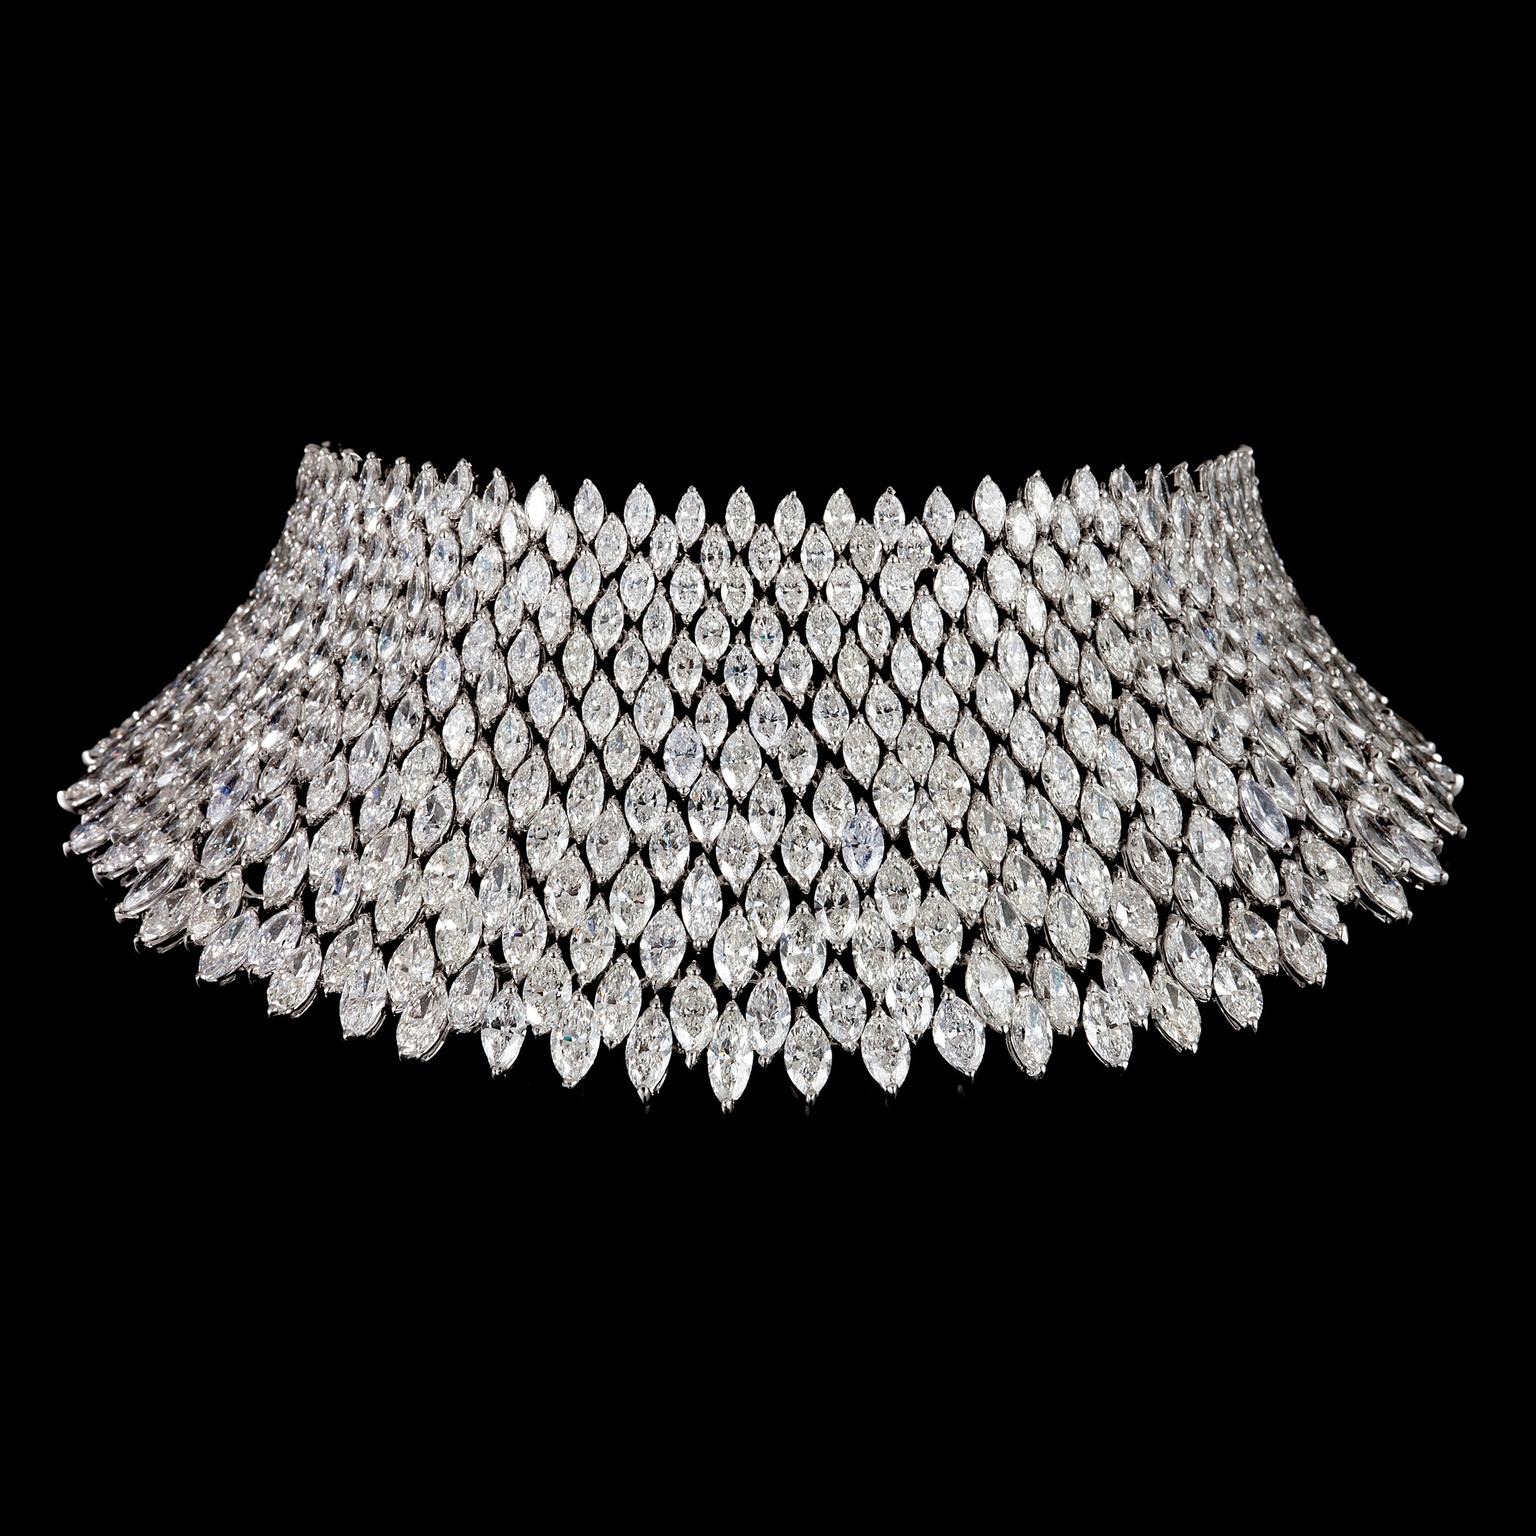 Bayco diamond choker necklace set with 218 carats of marquise diamonds